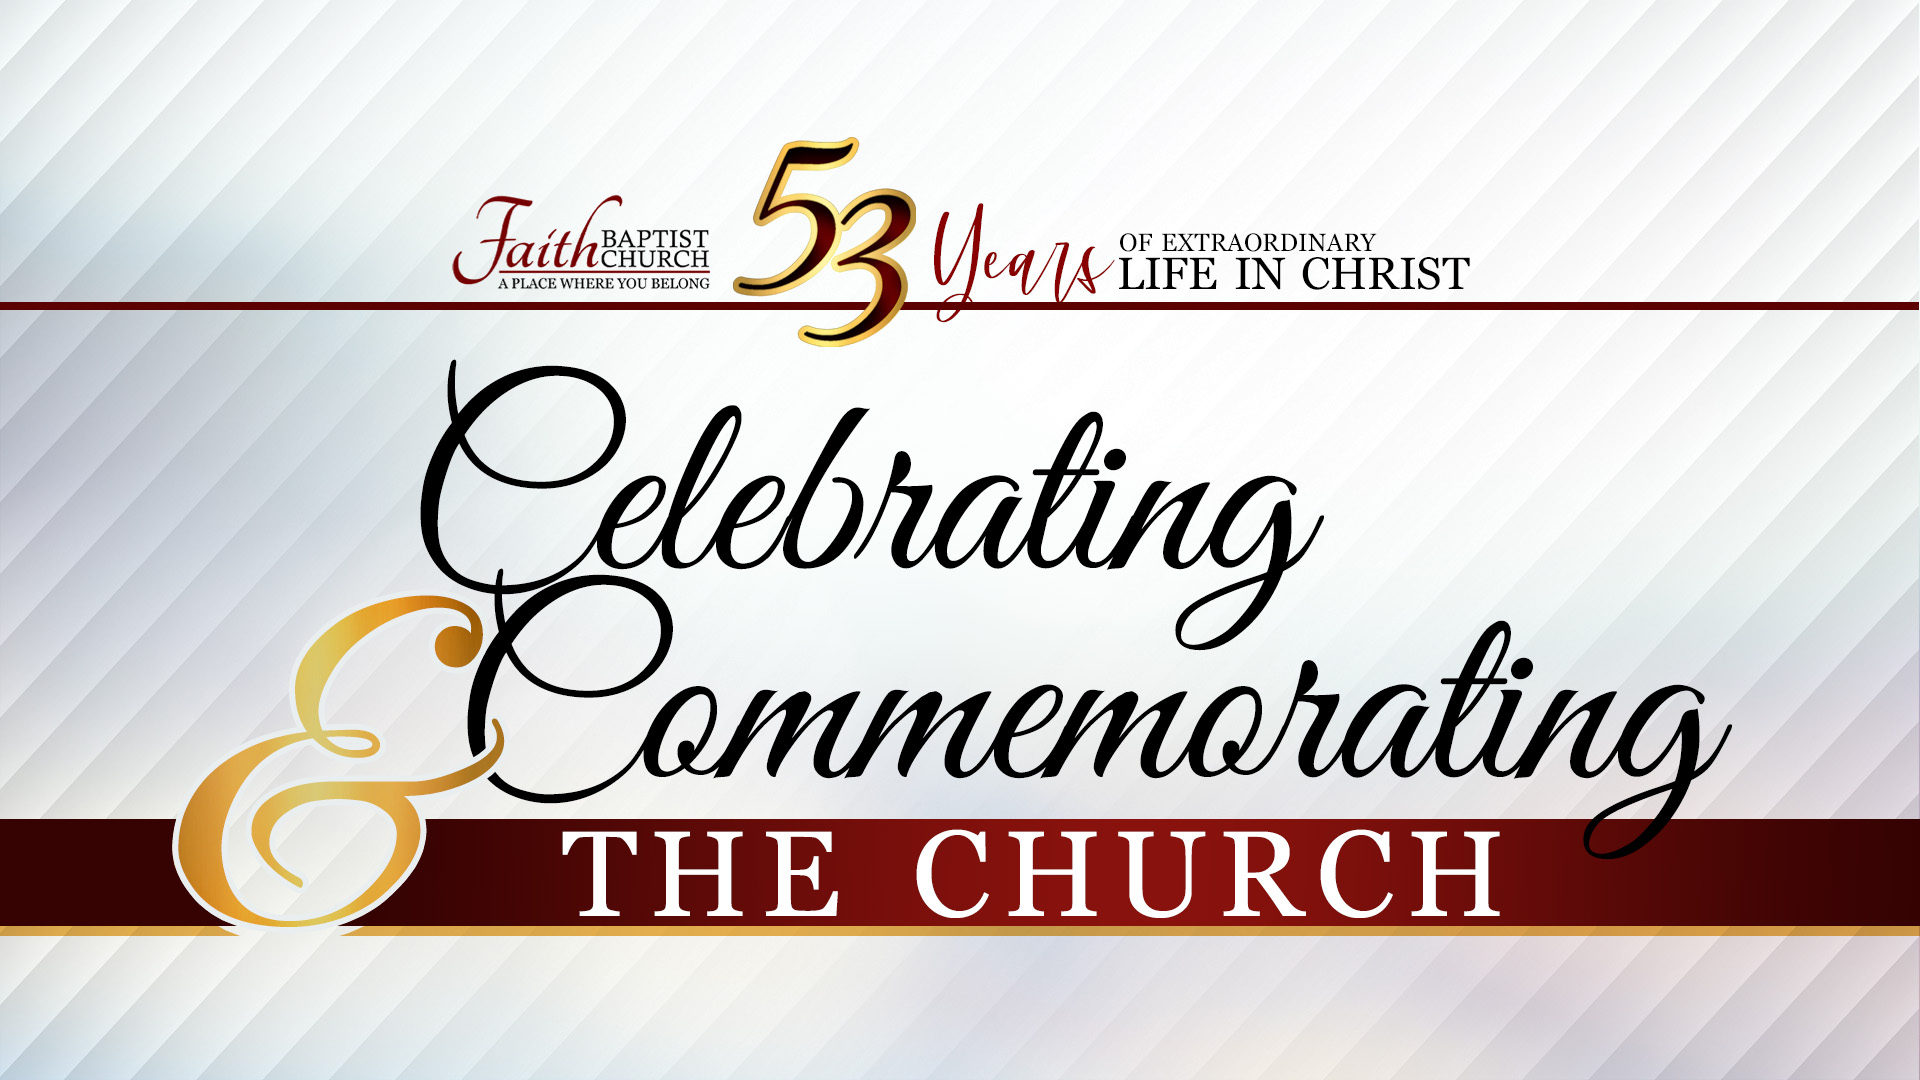 Celebrating & Commemorating the Church